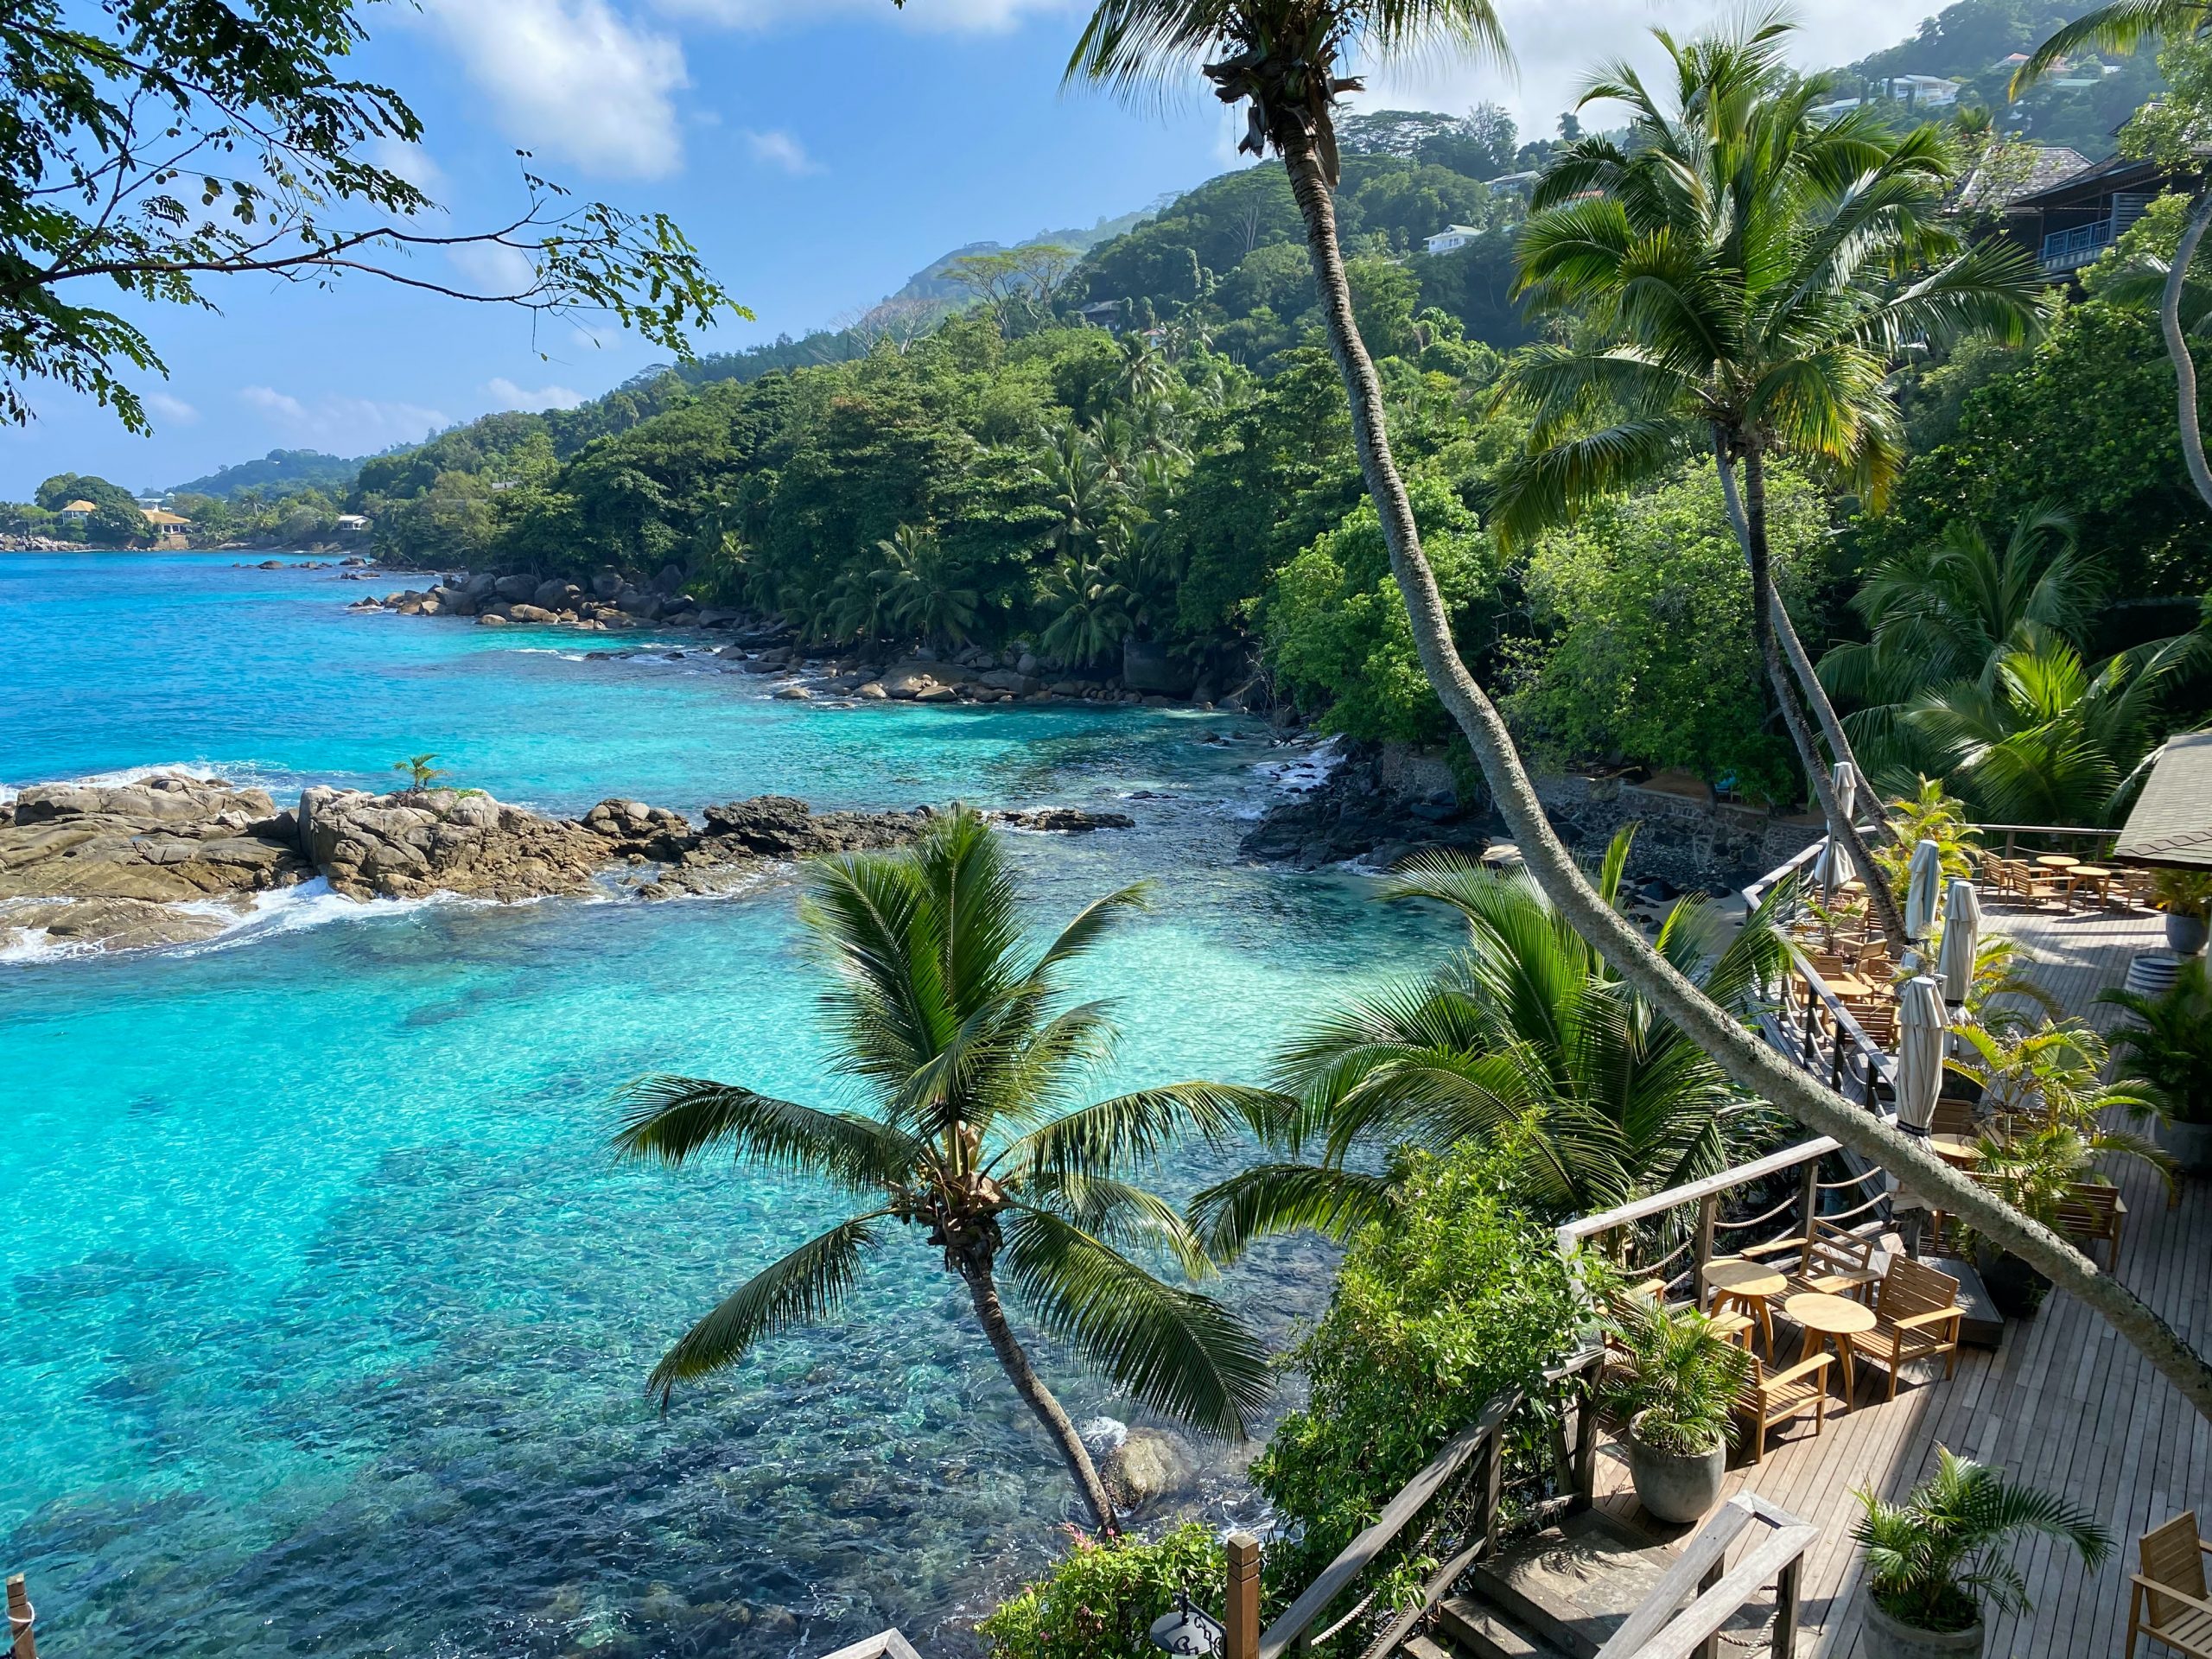 The beautiful Seychelles coastline framed by palm trees.